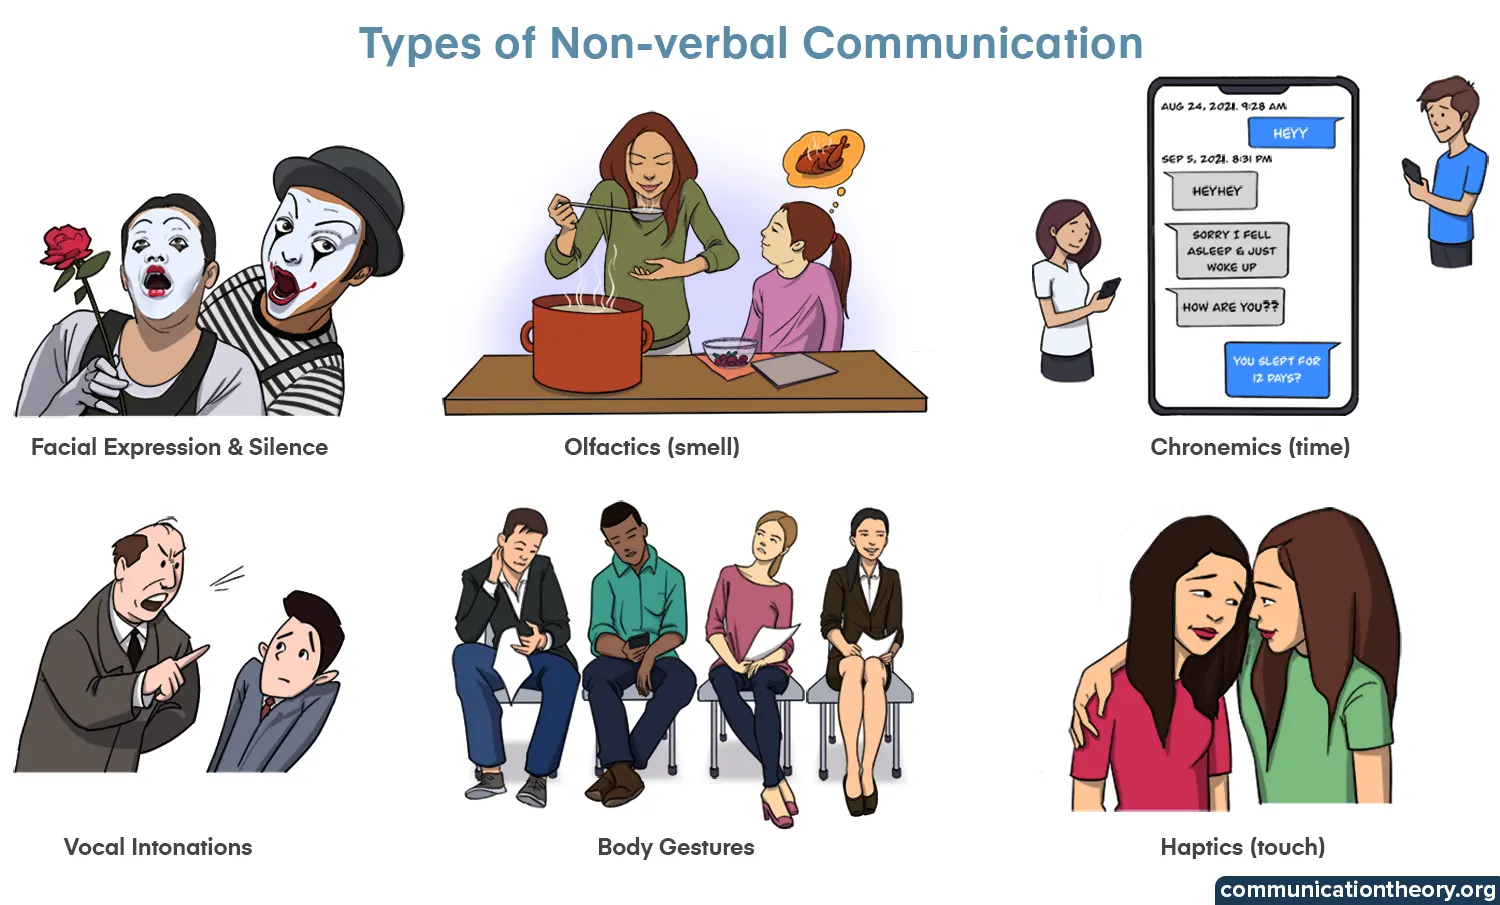 explain verbal and nonverbal communication